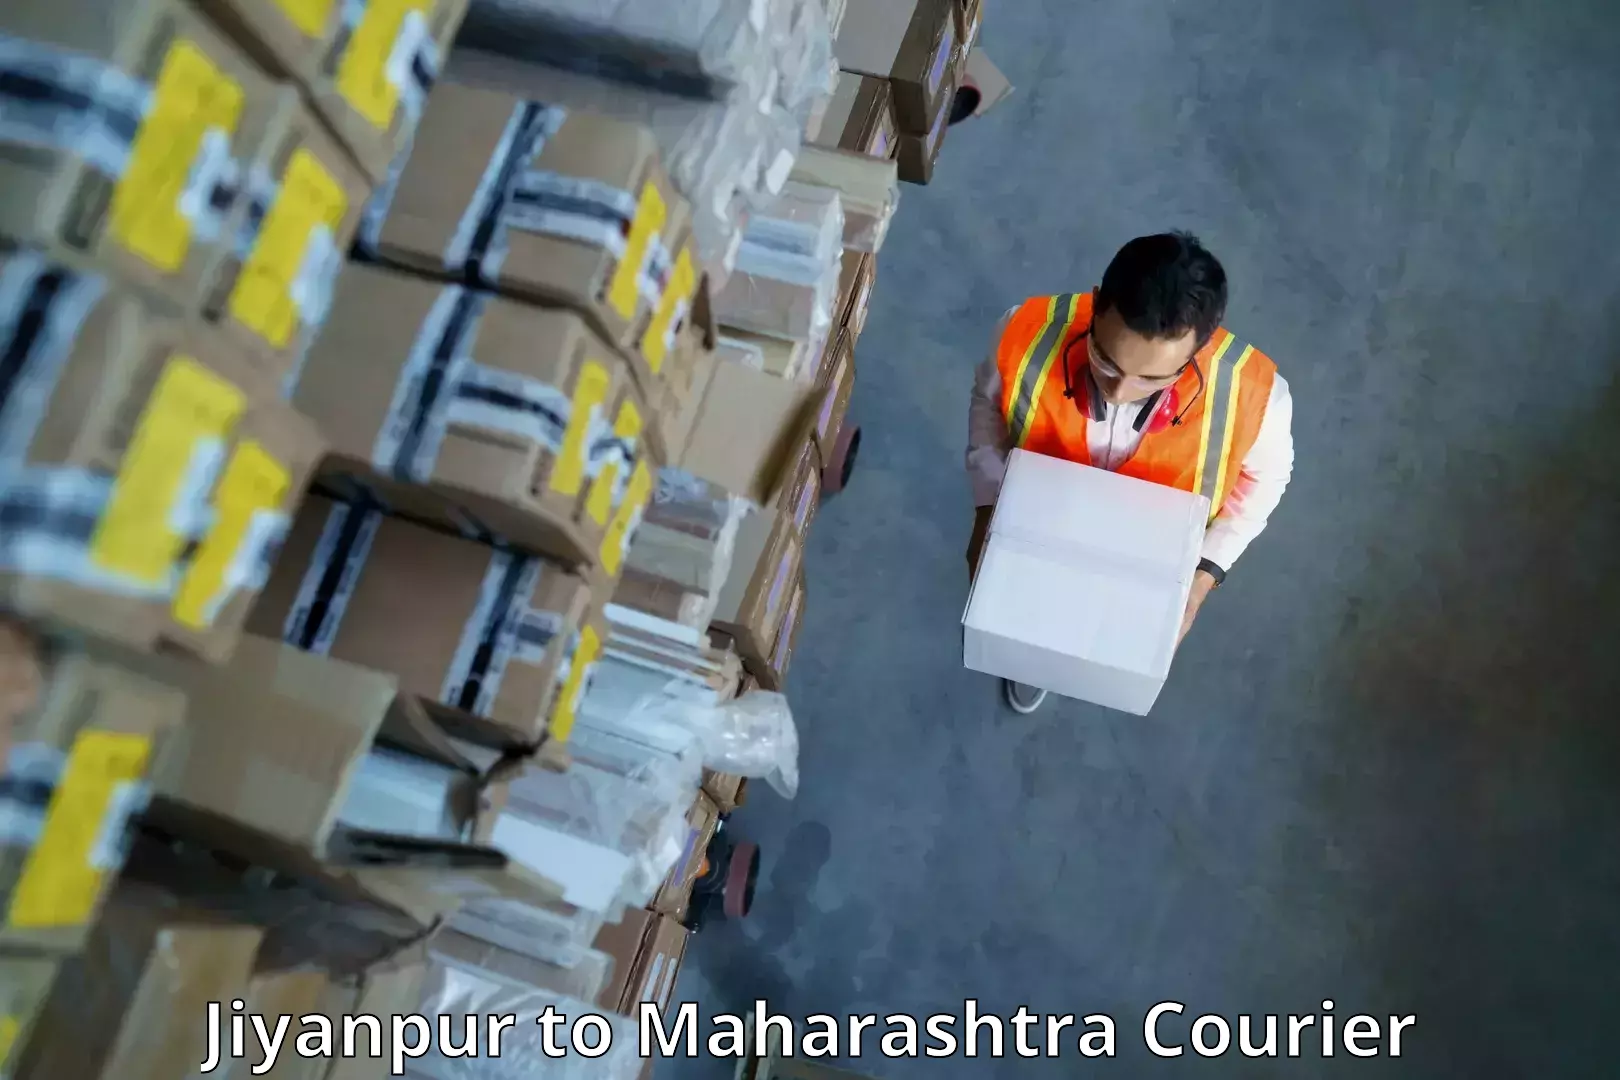 Global shipping networks Jiyanpur to Nagothane